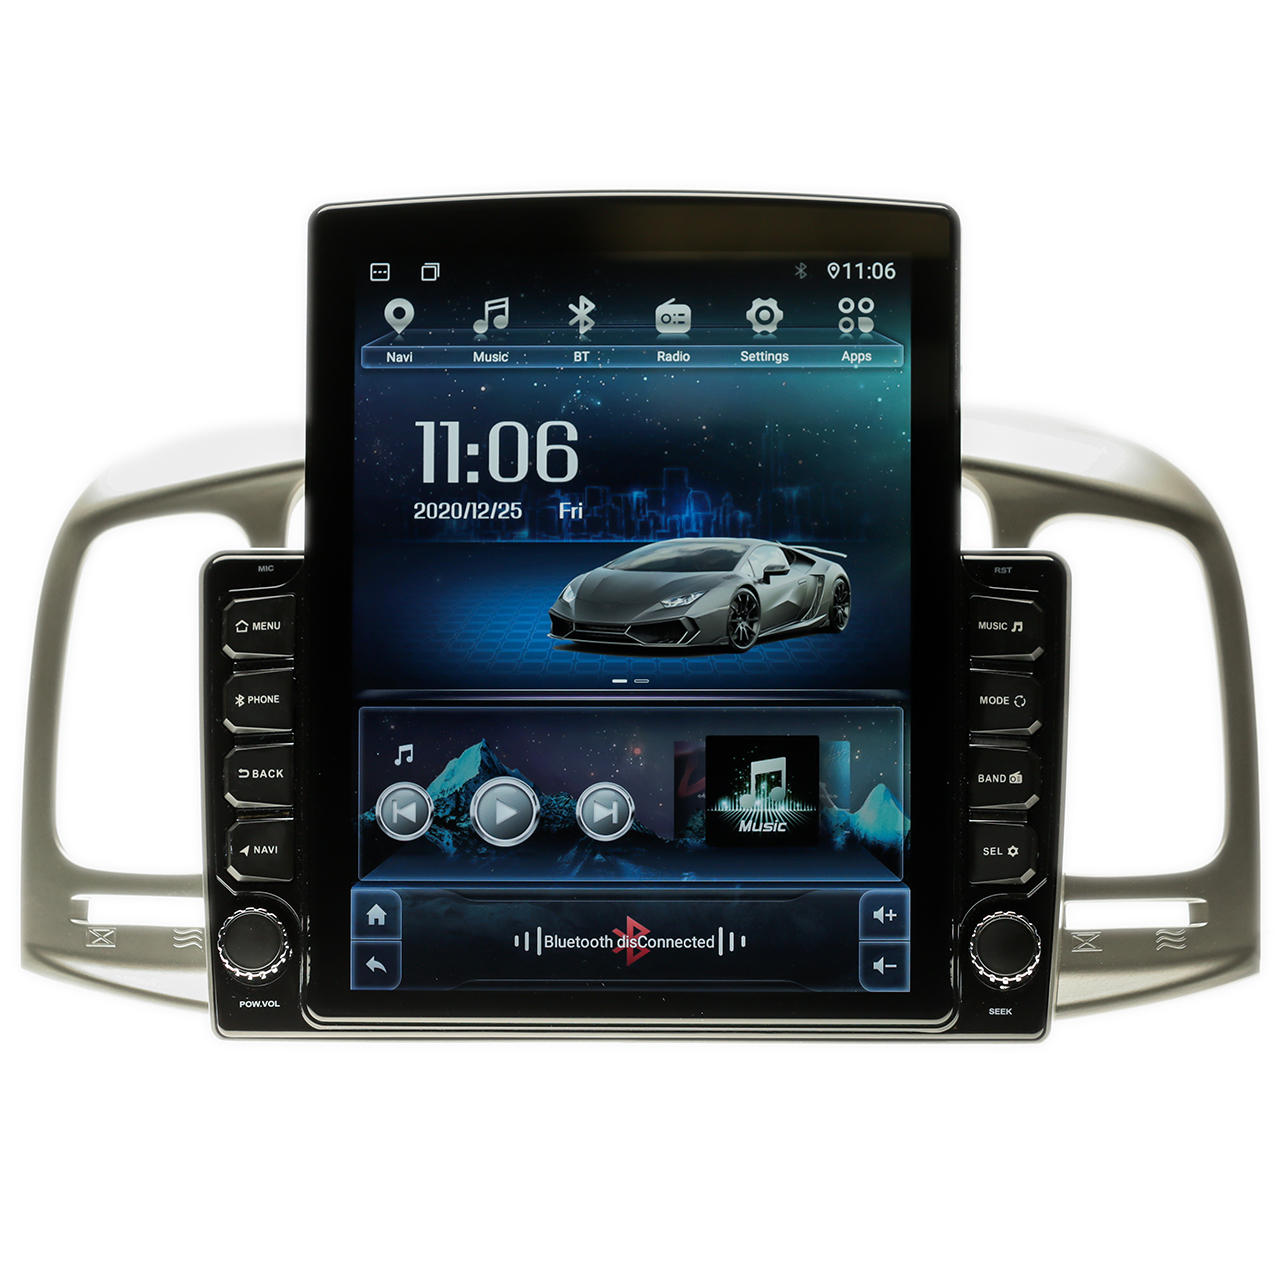 Navigatie AUTONAV ECO Android GPS Dedicata Hyundai Accent 2005-2011, Model XPERT Memorie 16GB Stocare, 1GB DDR3 RAM, Butoane Si Volum Fizice, Display Vertical Stil Tesla 10